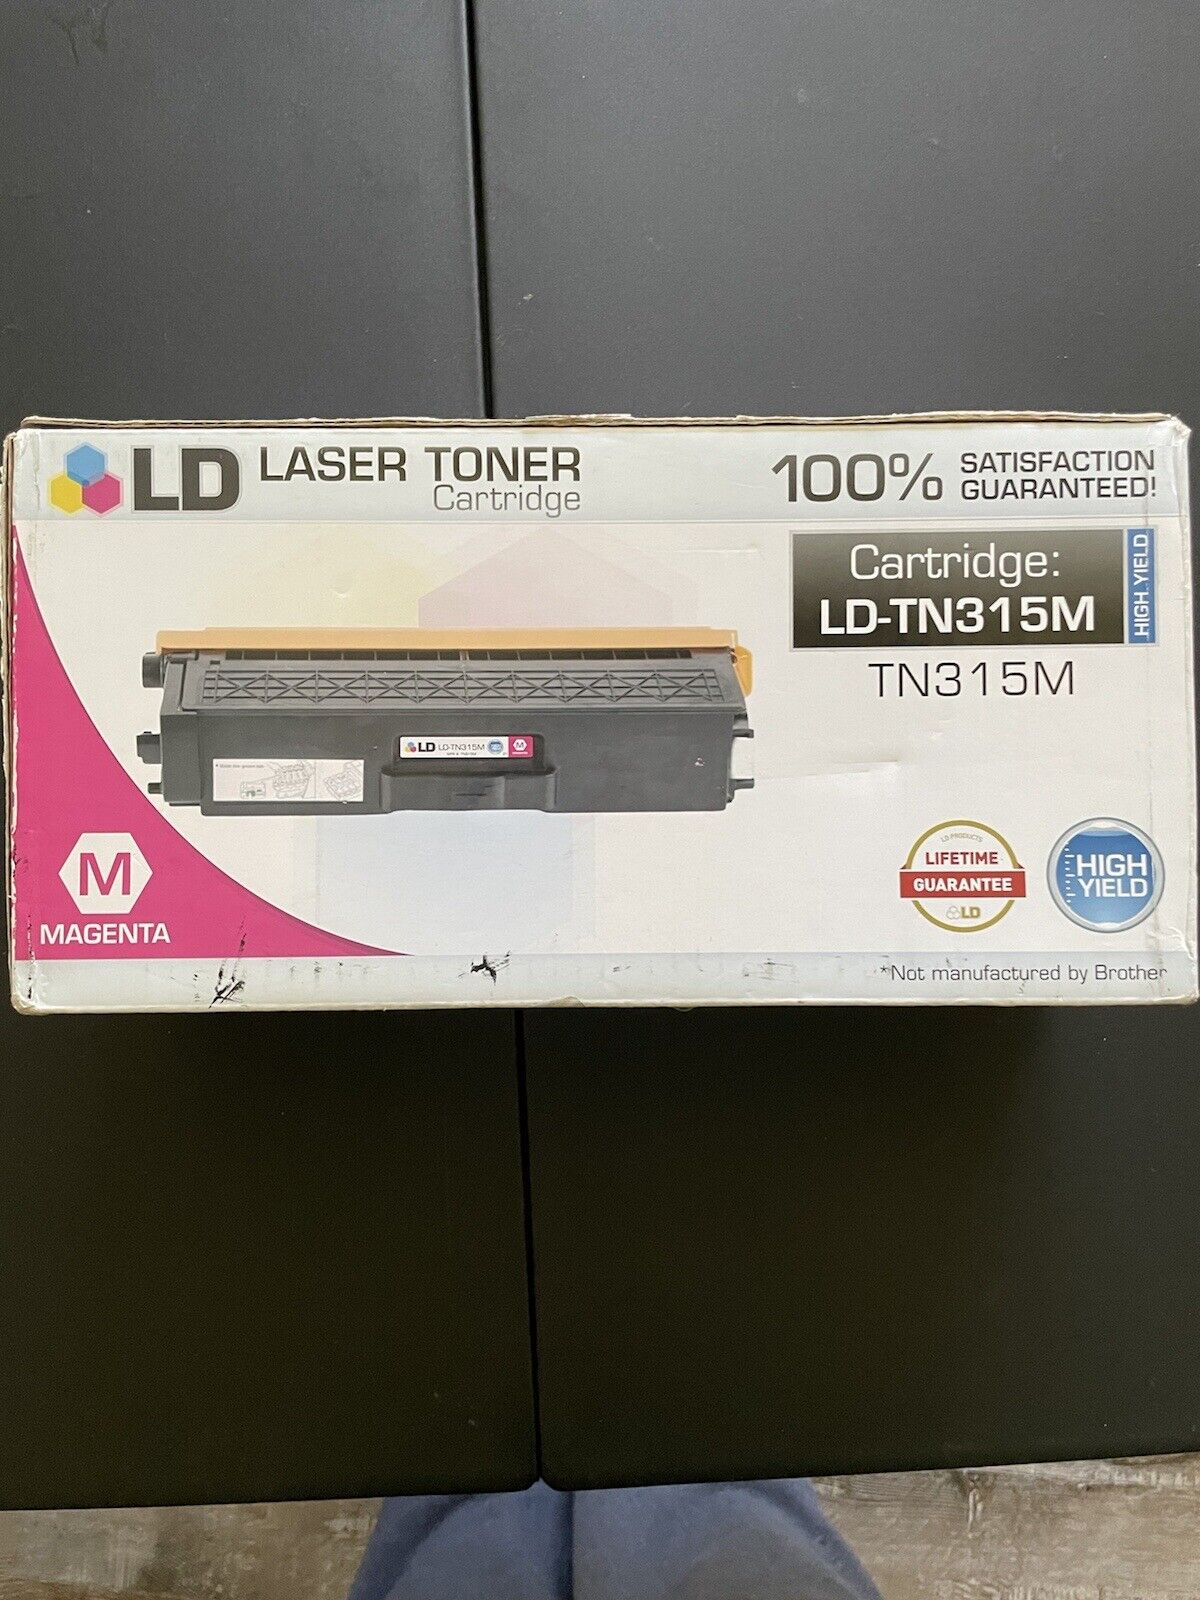 LD TN315M TN315 Magenta Laser Toner Cartridge for Brother HL-4570cdw MFC-9970cdw